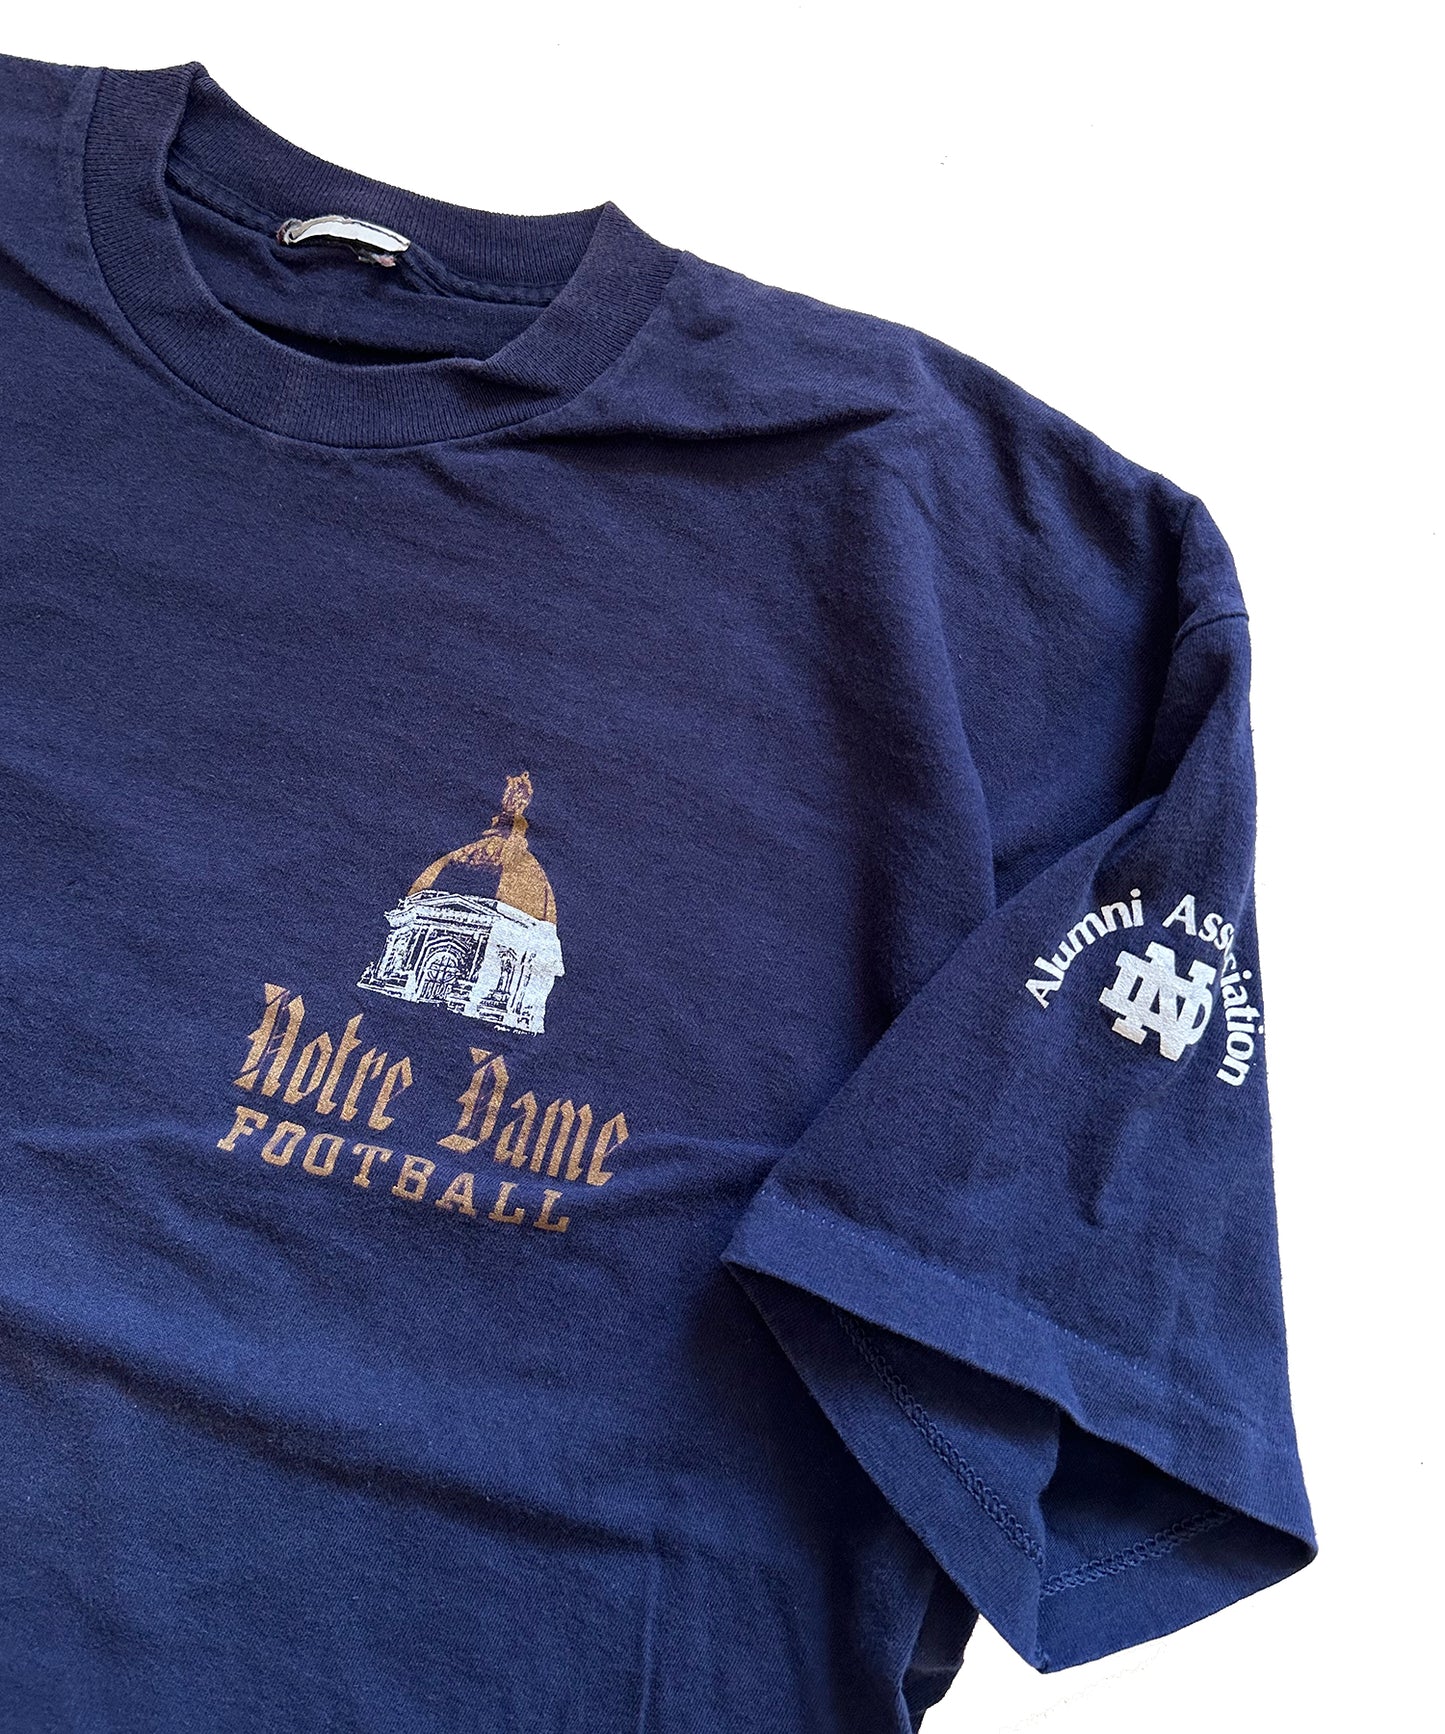 Vintage Notre Dame Football Tee (XL)